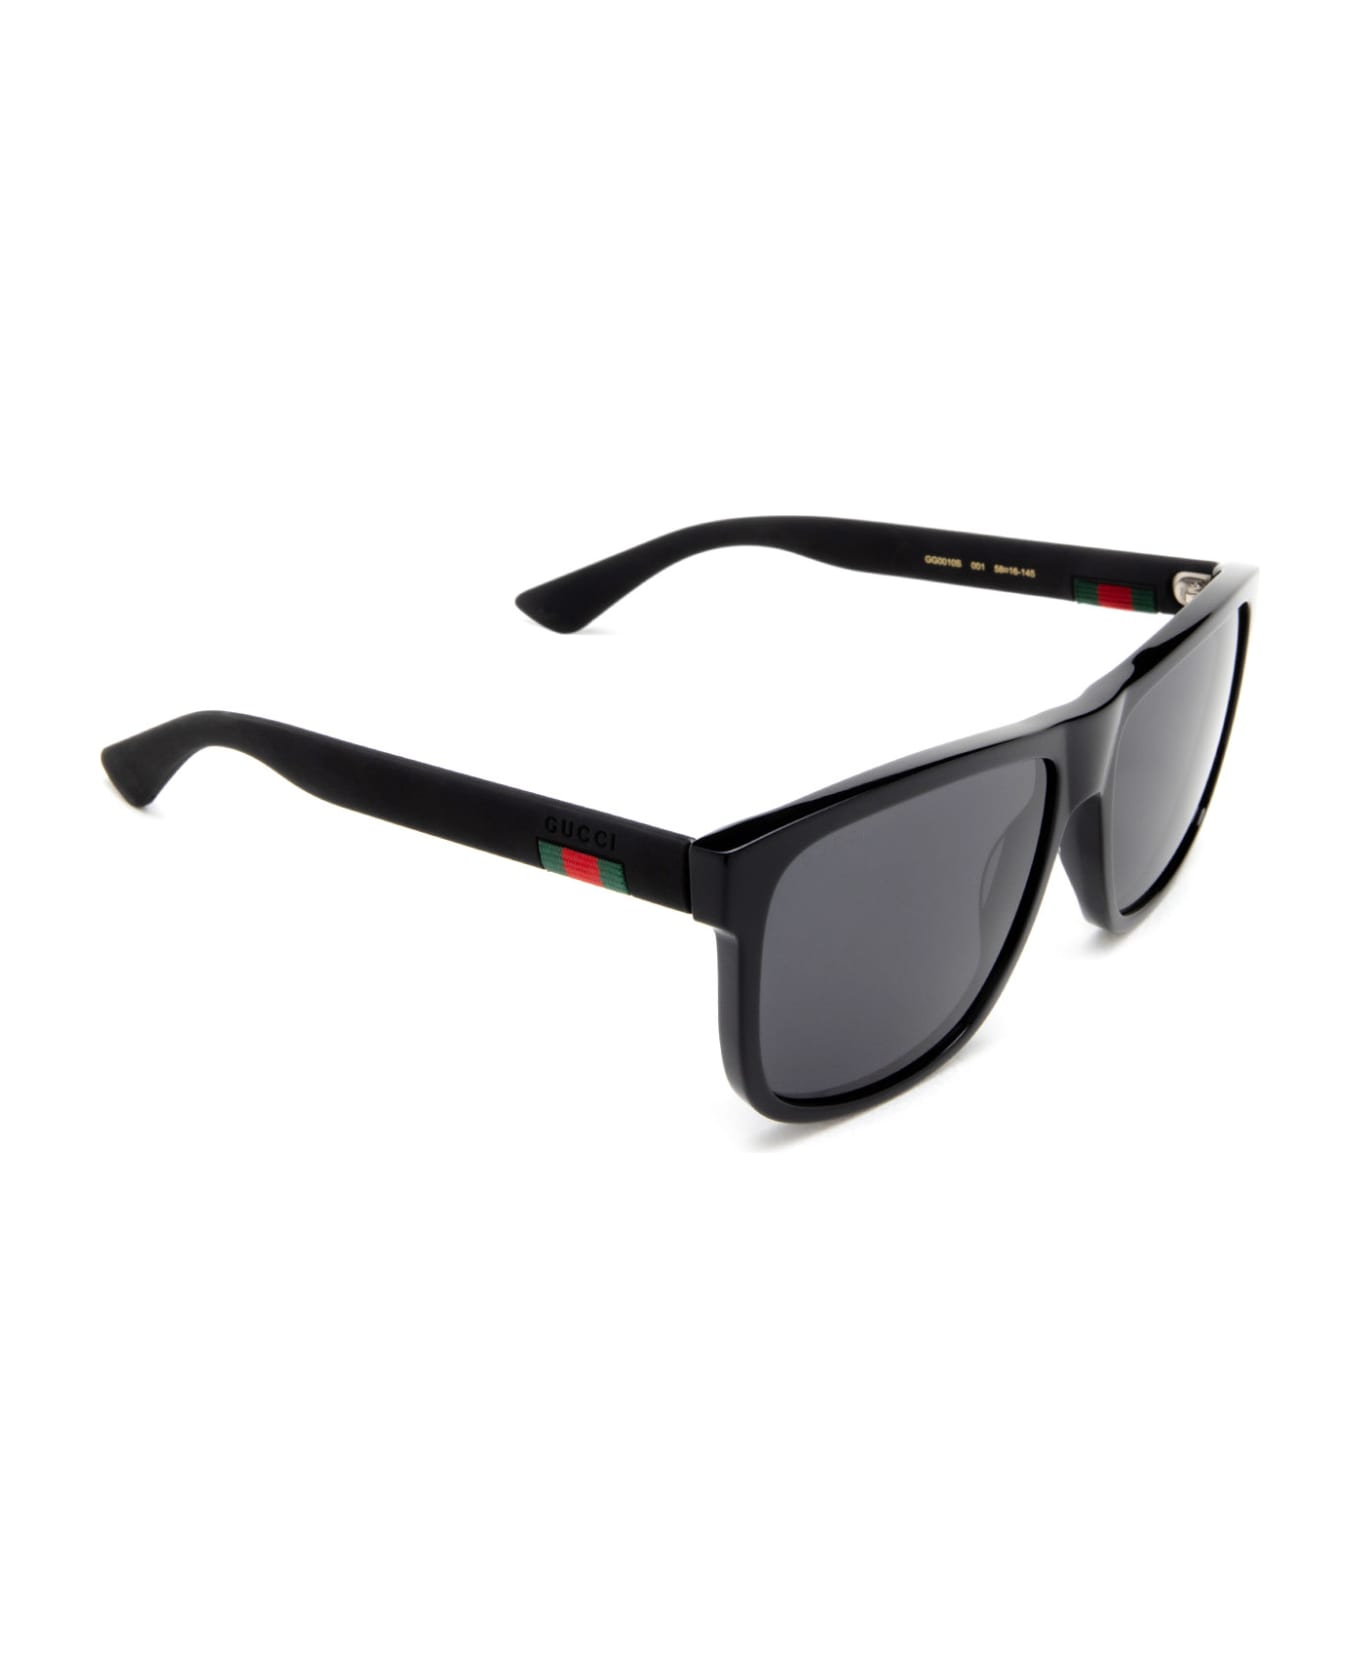 Gucci Eyewear Gg0010s Black Sunglasses - Black